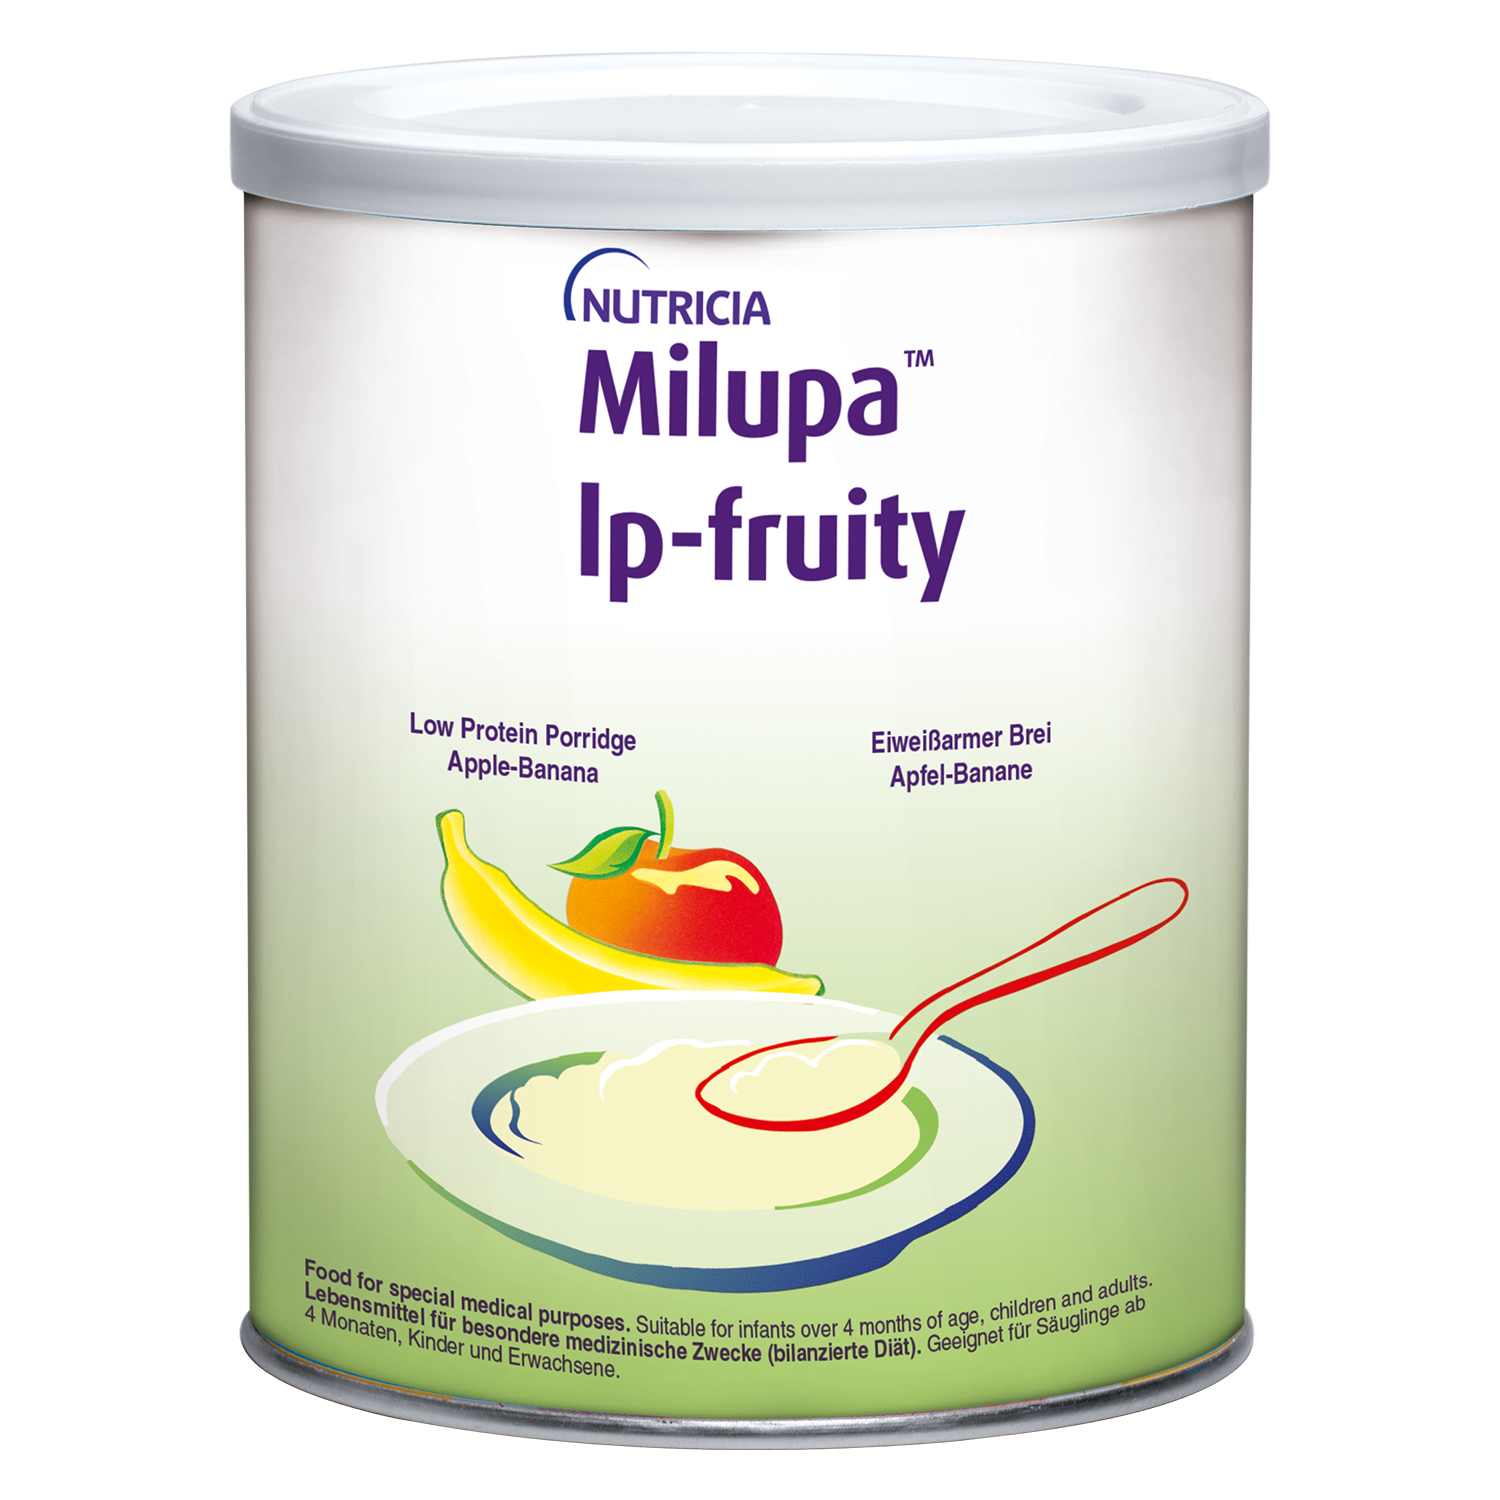 Milupa lp-fruity Apfel-Banane (300g)